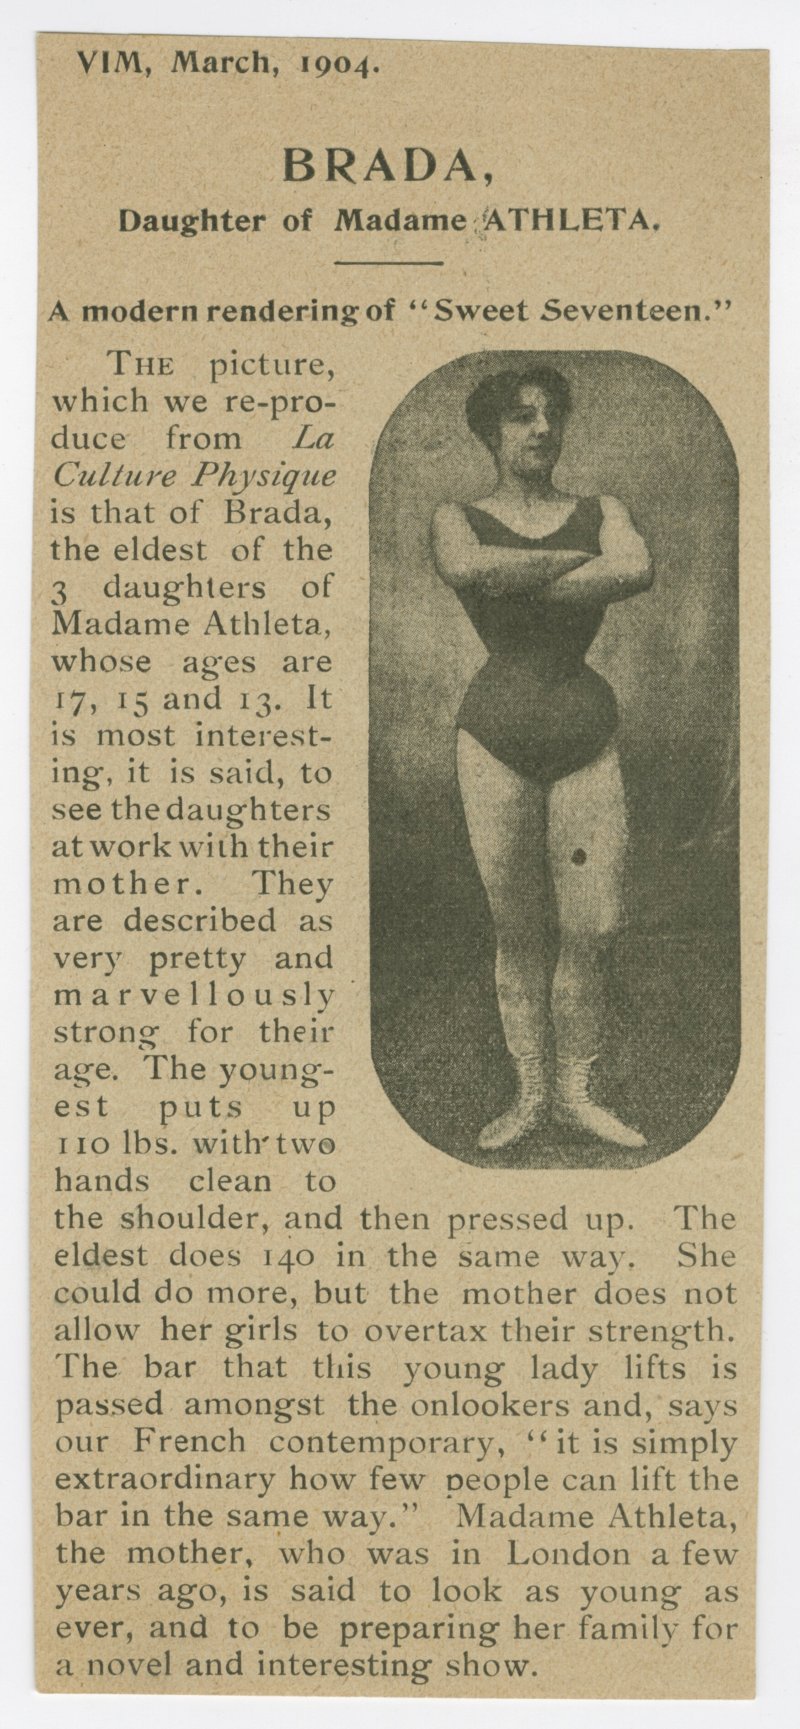 Brada, daughter of Madame Athleta